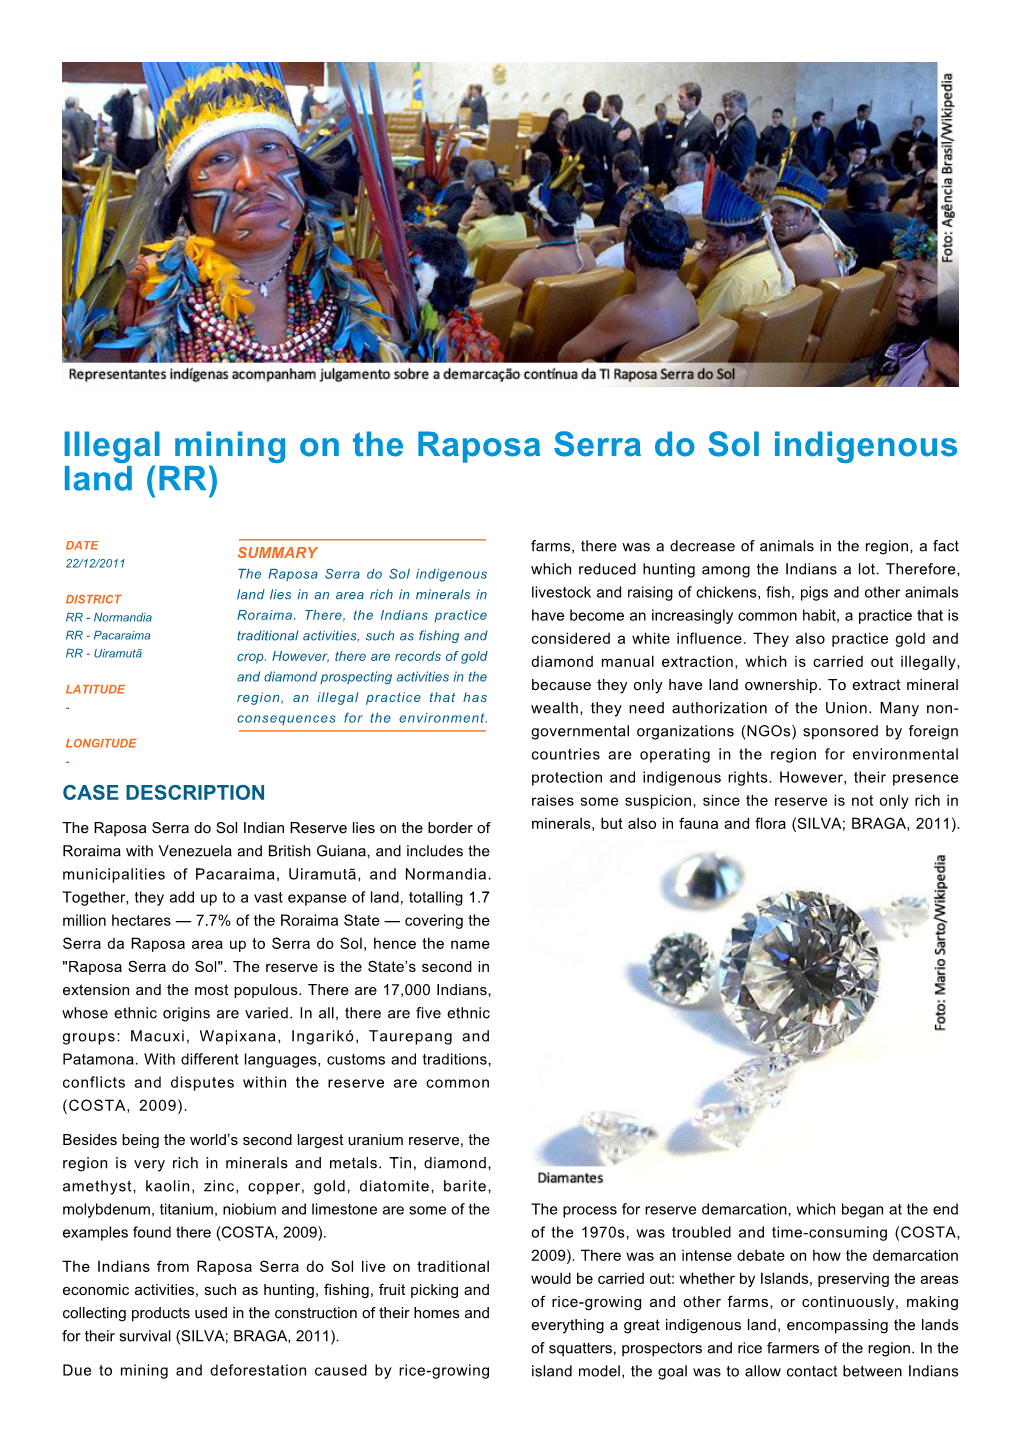 Illegal Mining on the Raposa Serra Do Sol Indigenous Land (RR)